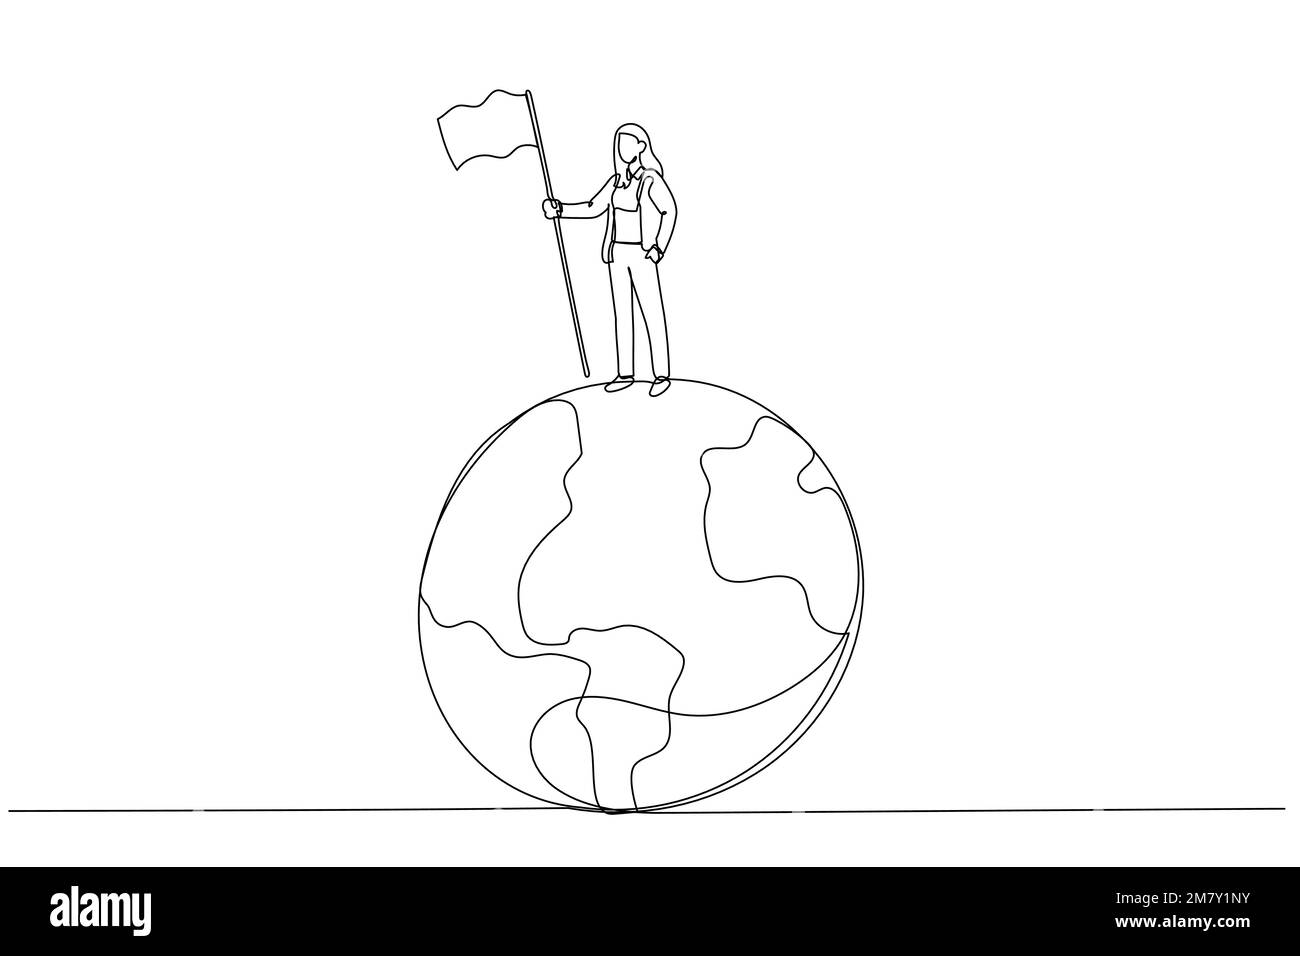 Illustration of businesswoman climb up ladder holding winning flag on globe winning global business competition. Single line art style design Stock Vector